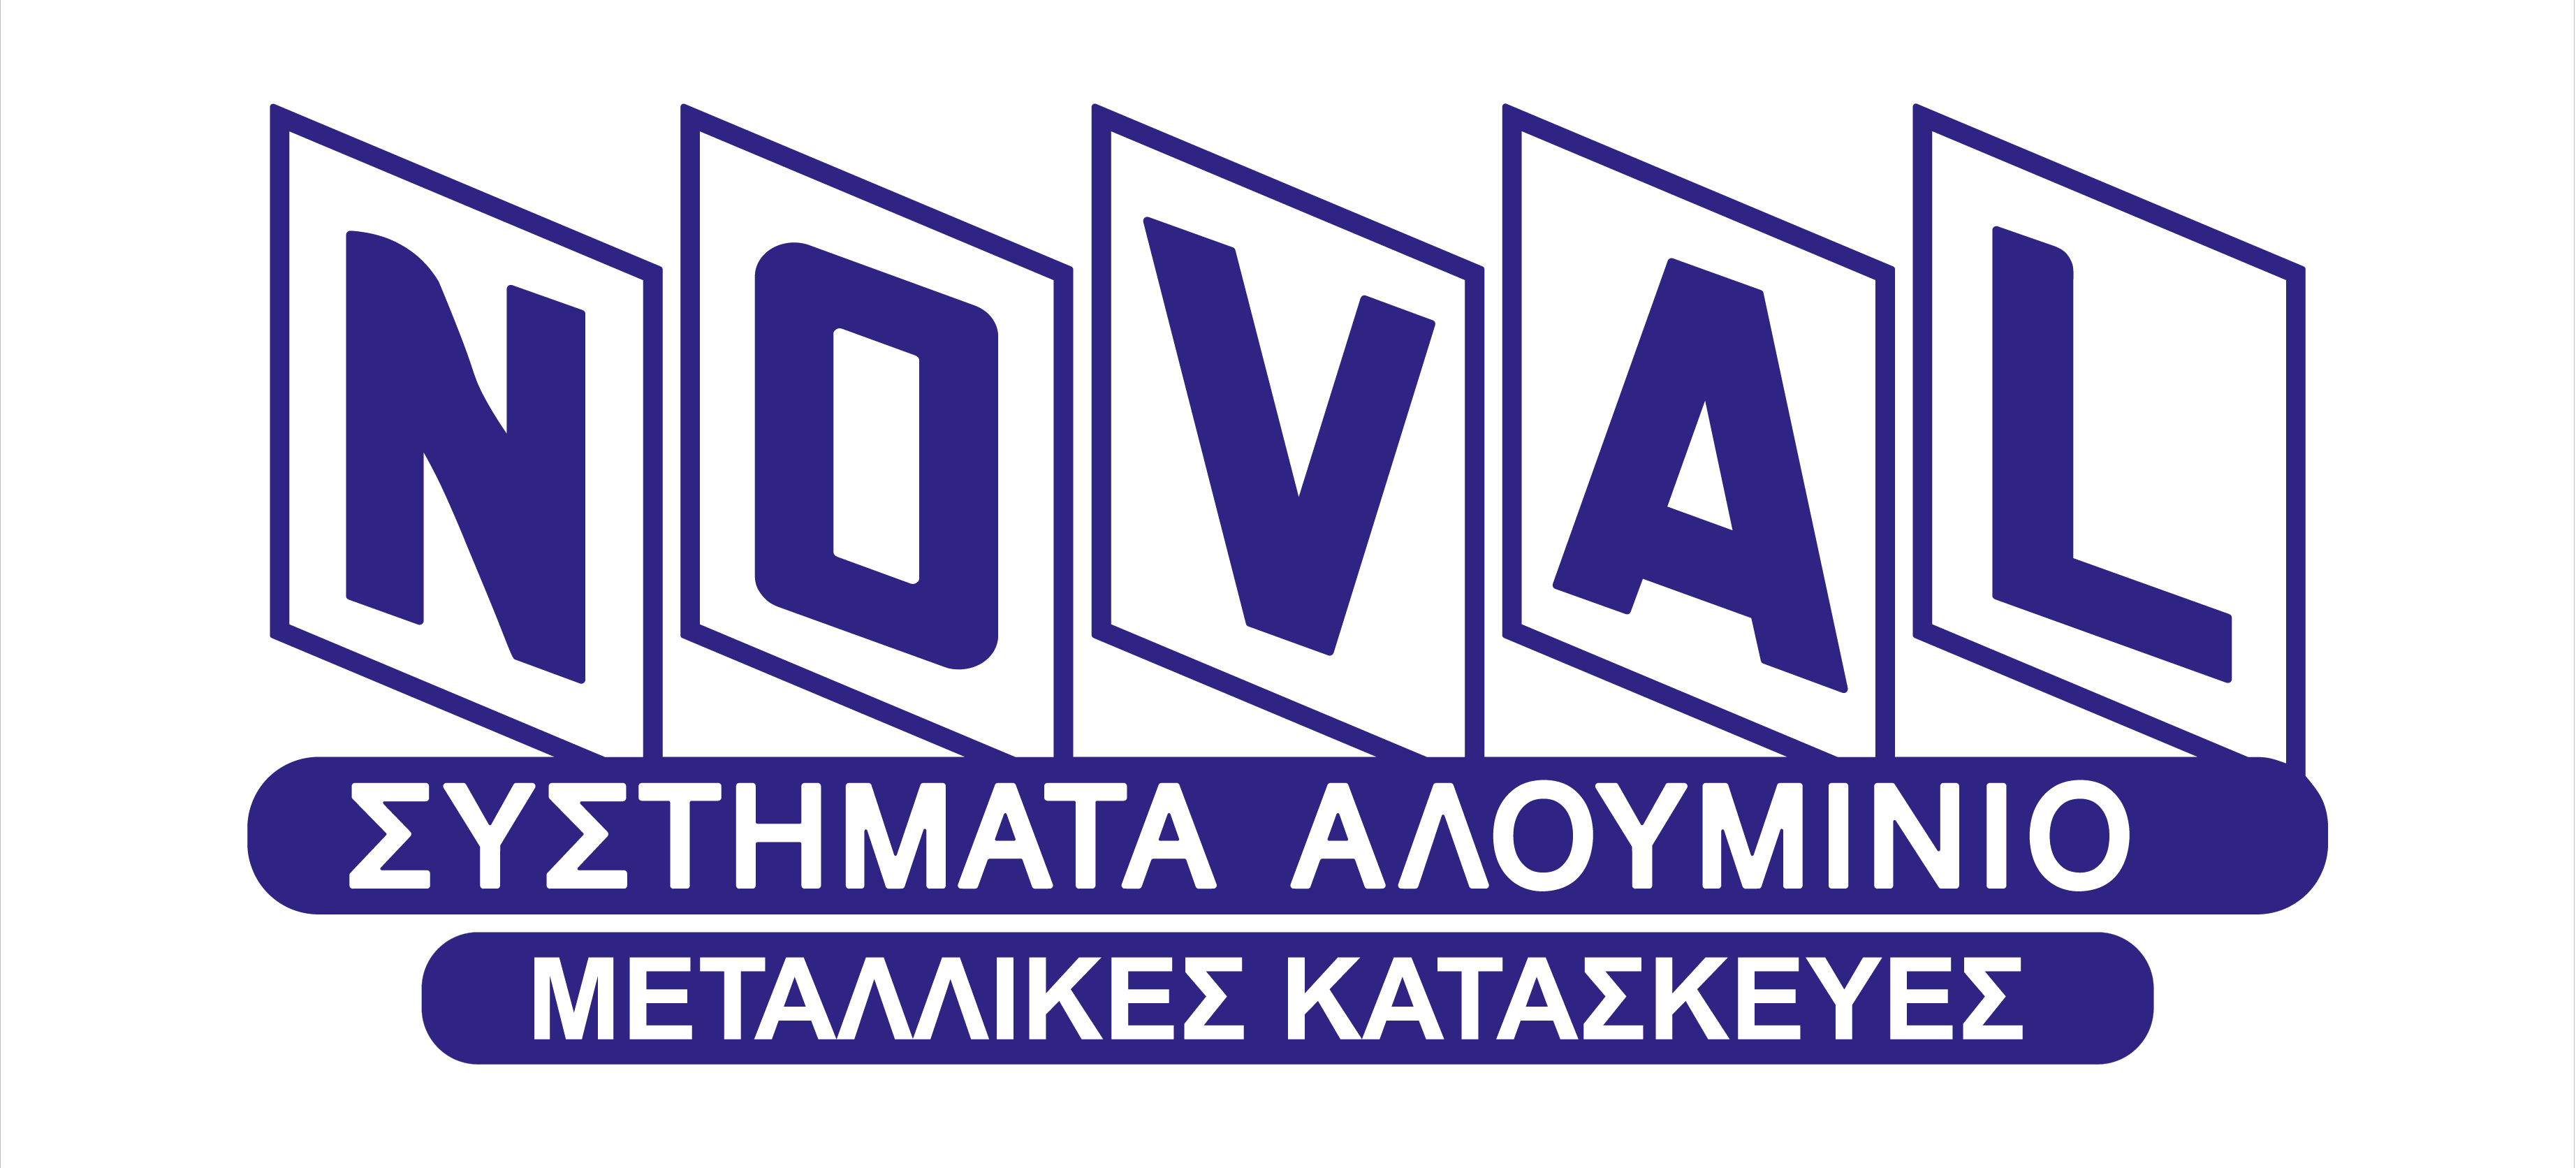 Noval ΠΑΤΟΥΝΑΣ